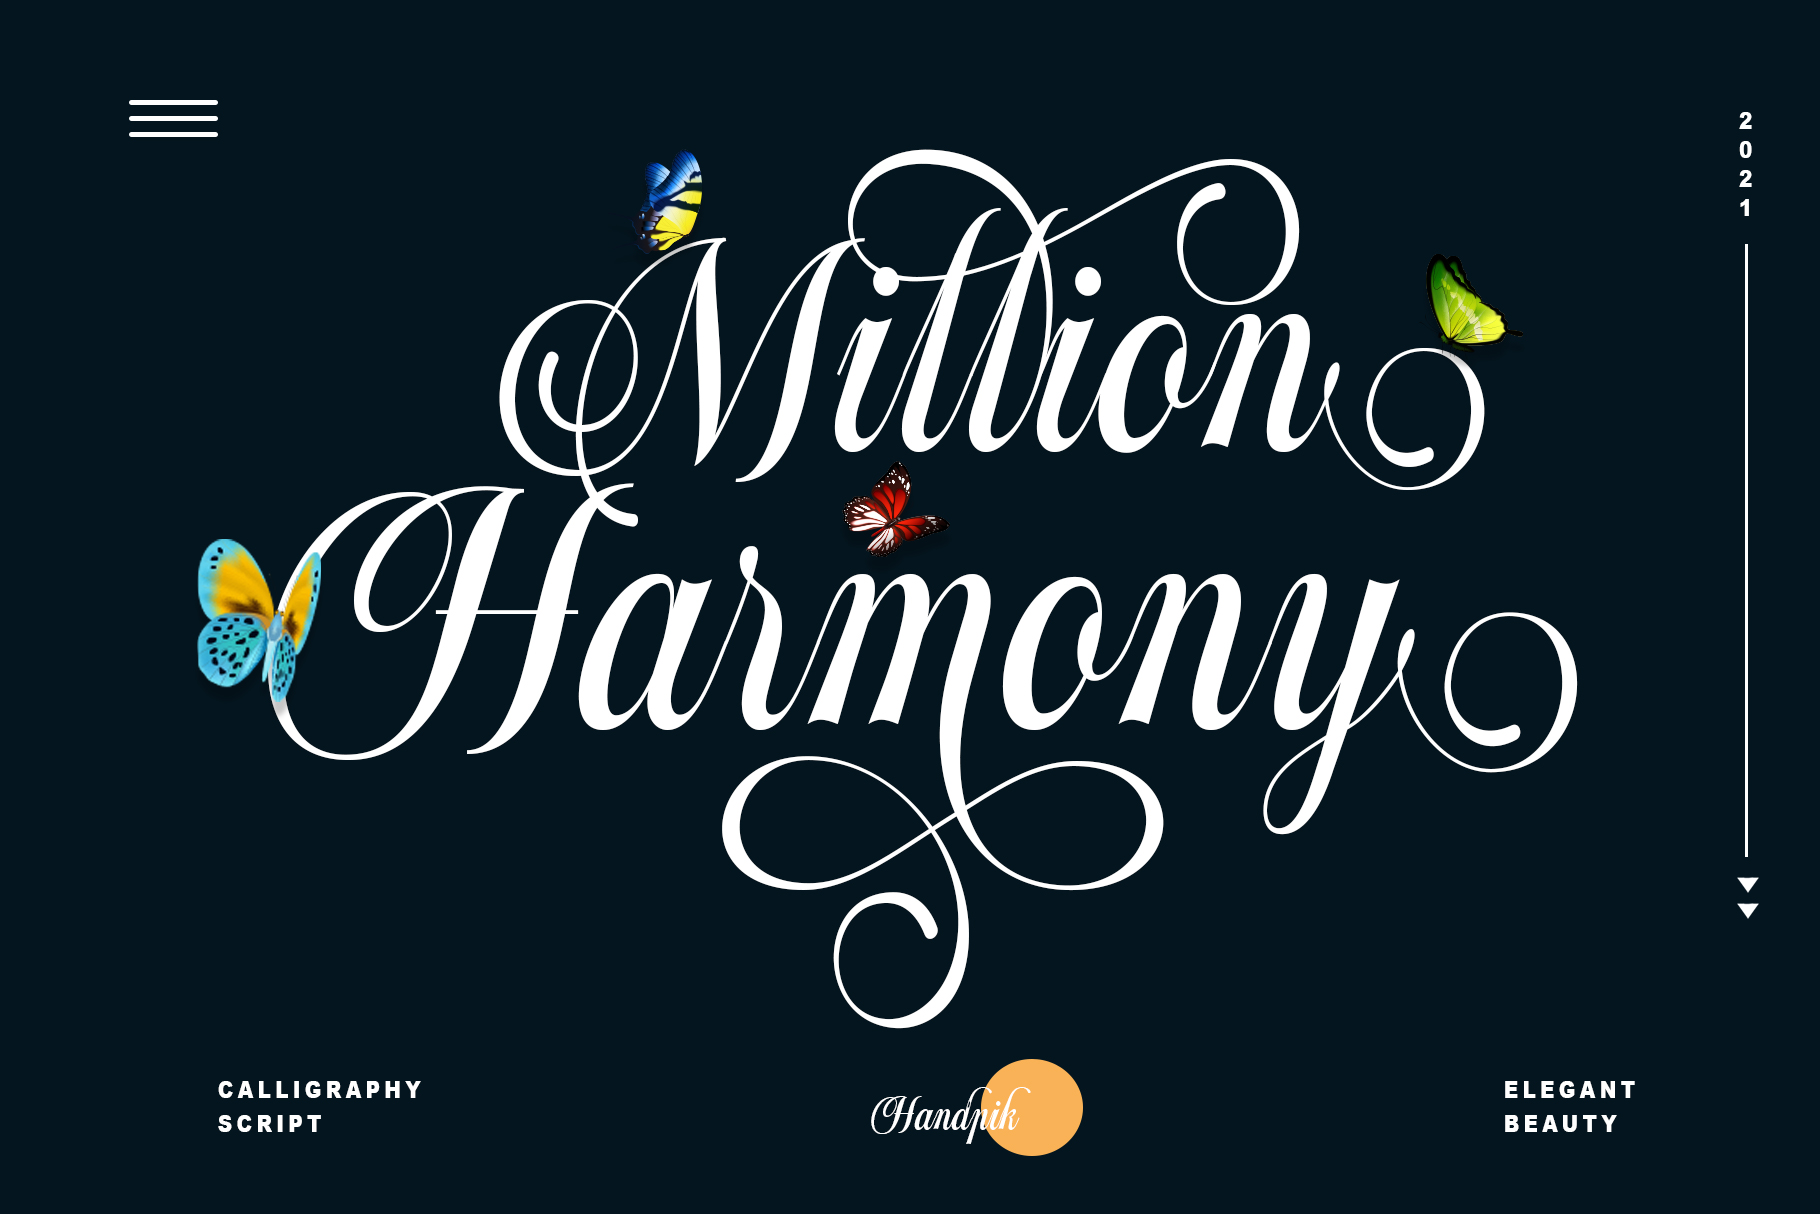 Million Harmony